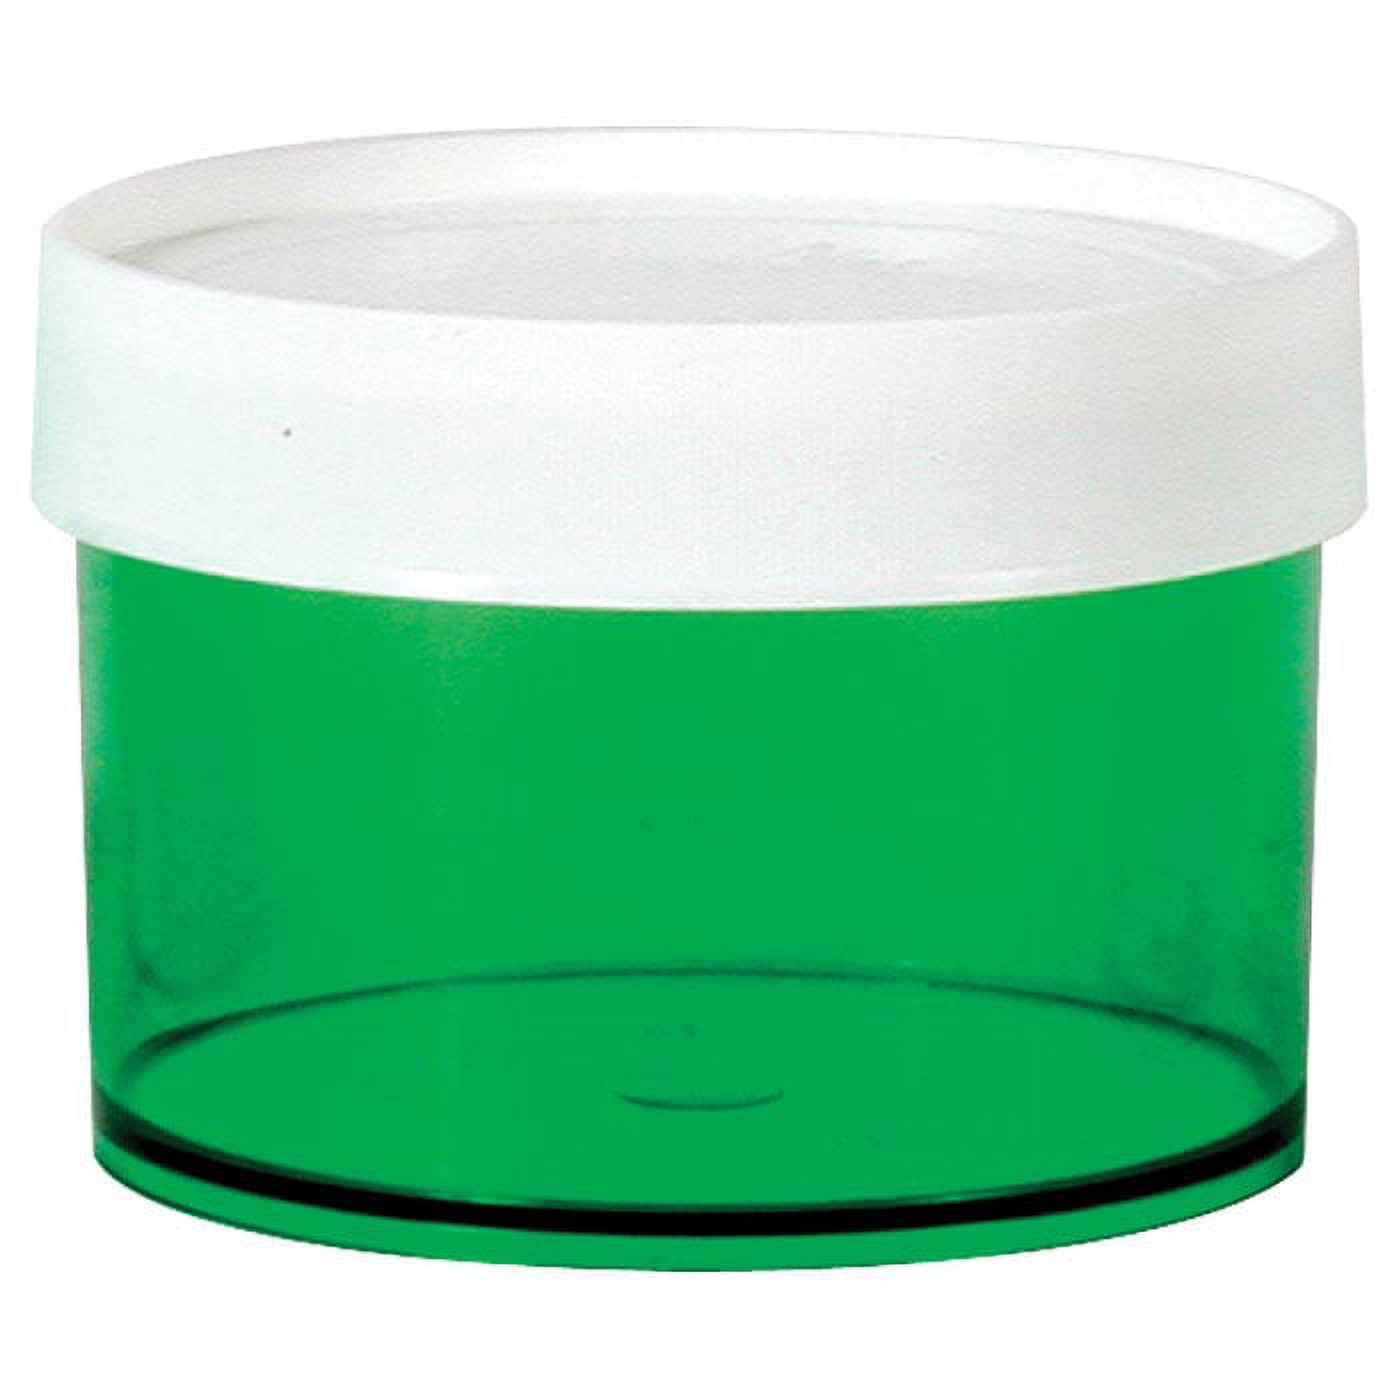 Nalgene Polypropylene Wide Mouth Storage Jar - 4 oz. - Clear - image 5 of 7